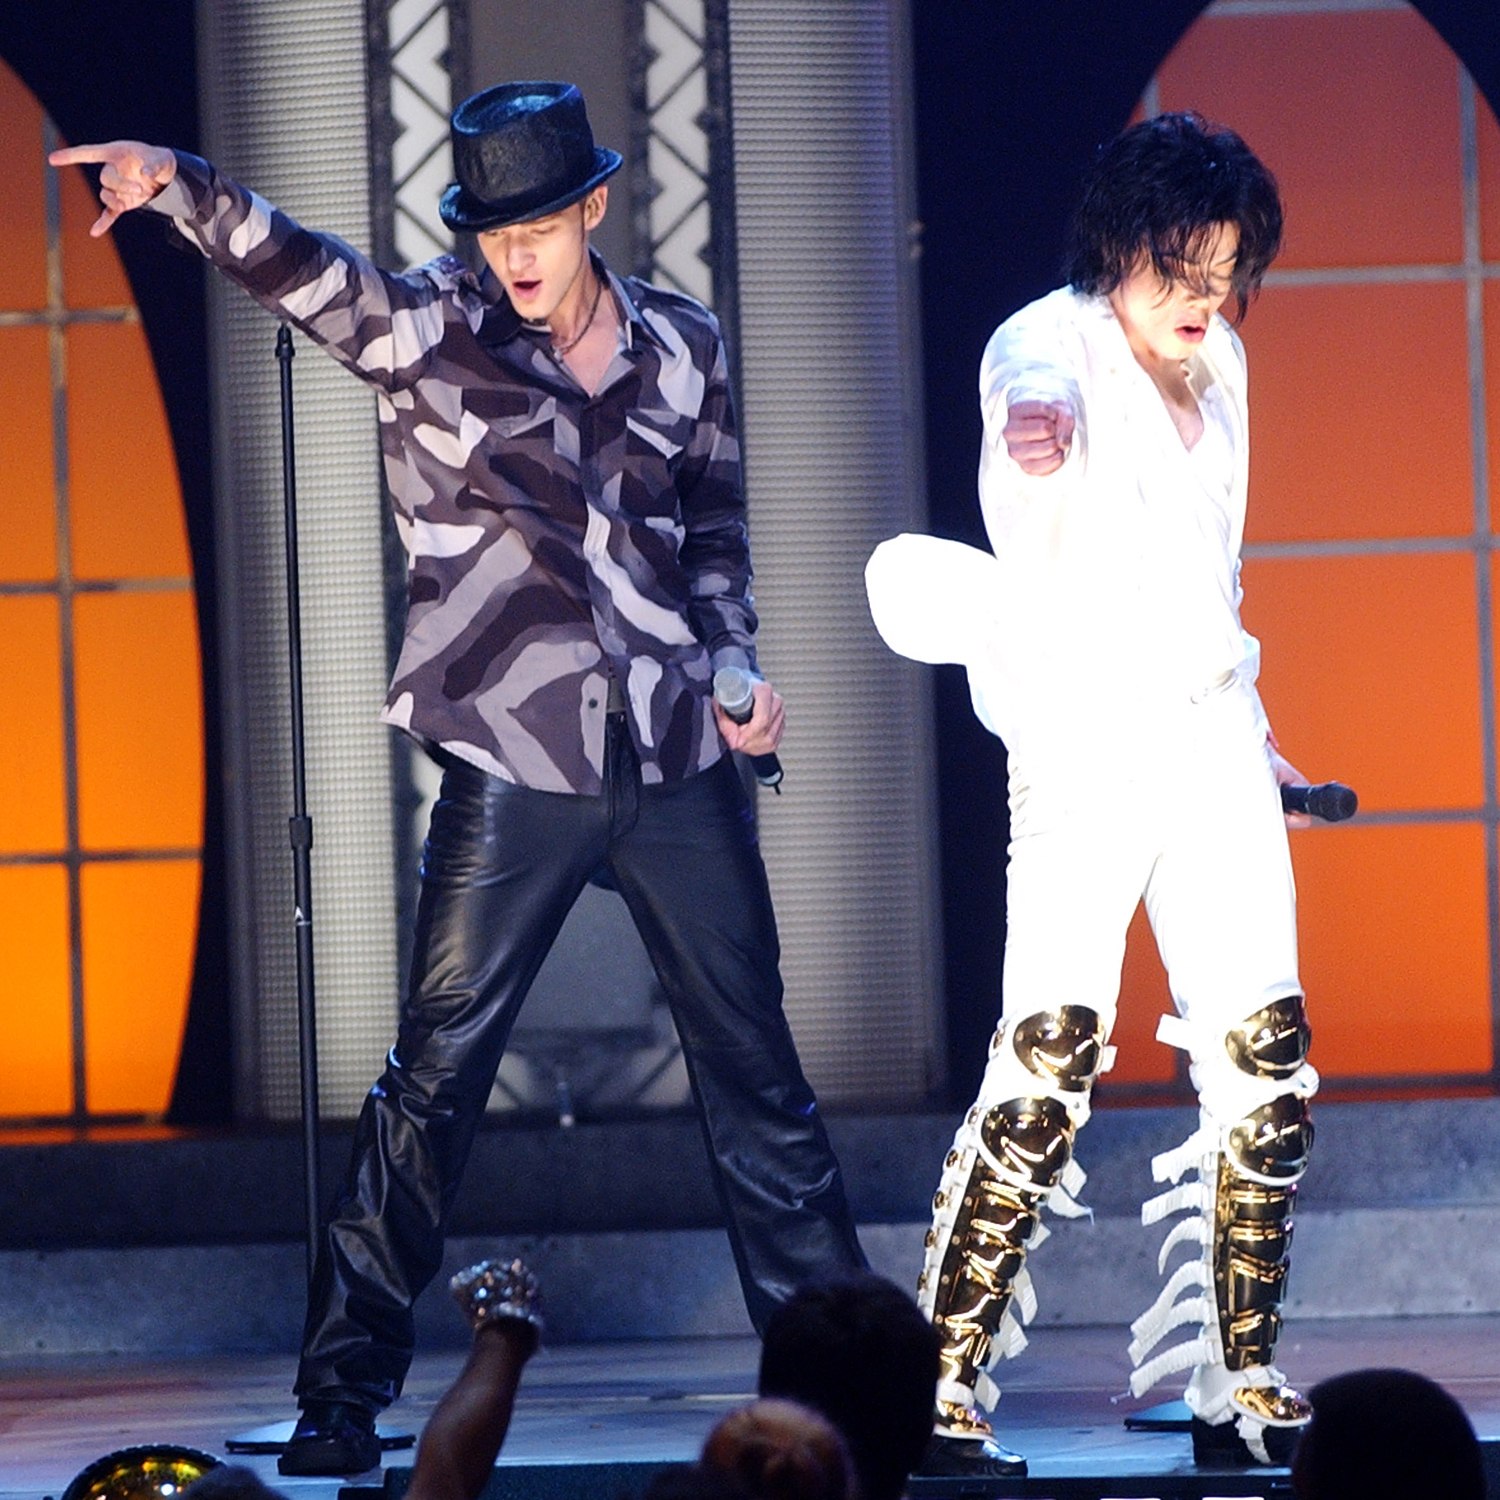 Michael Jackson's fashion influence lives on